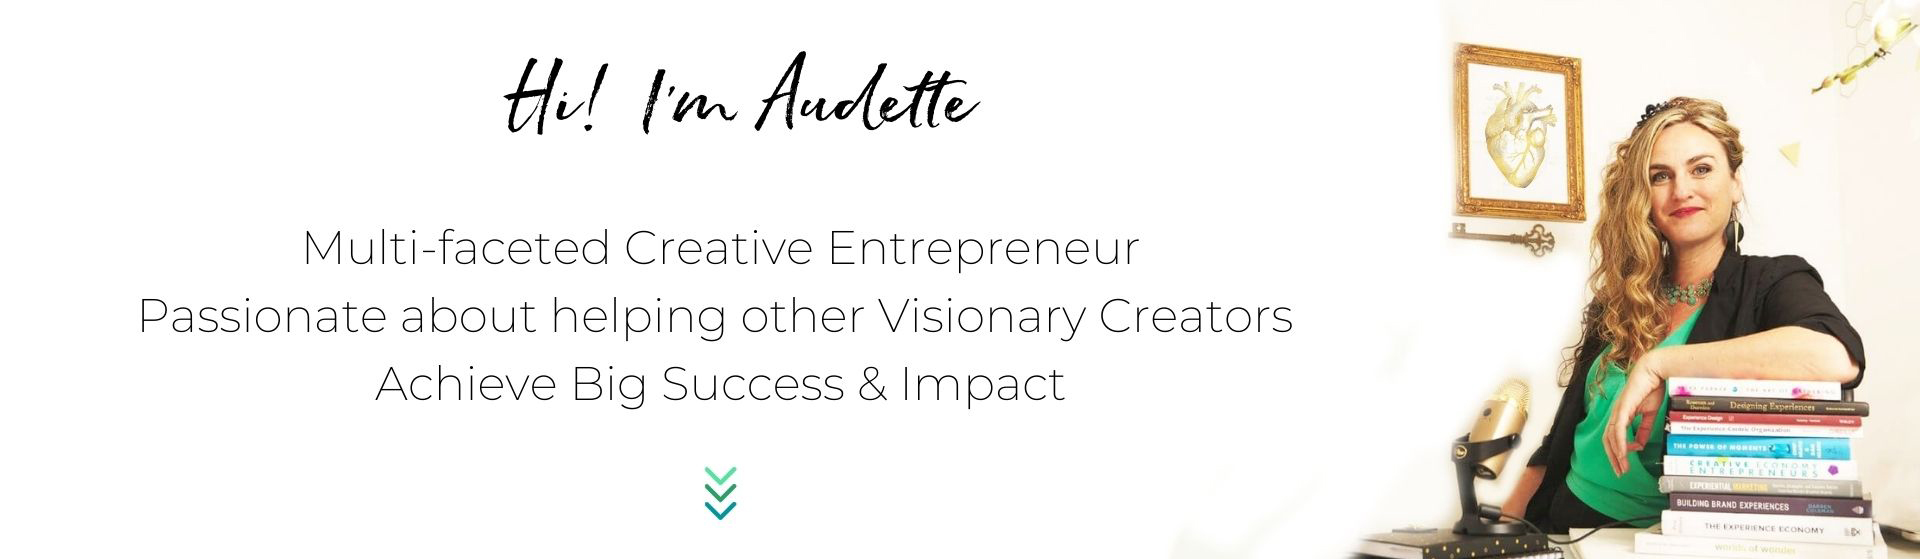 Audette Sophia Creative Business Owner & Business Mentor